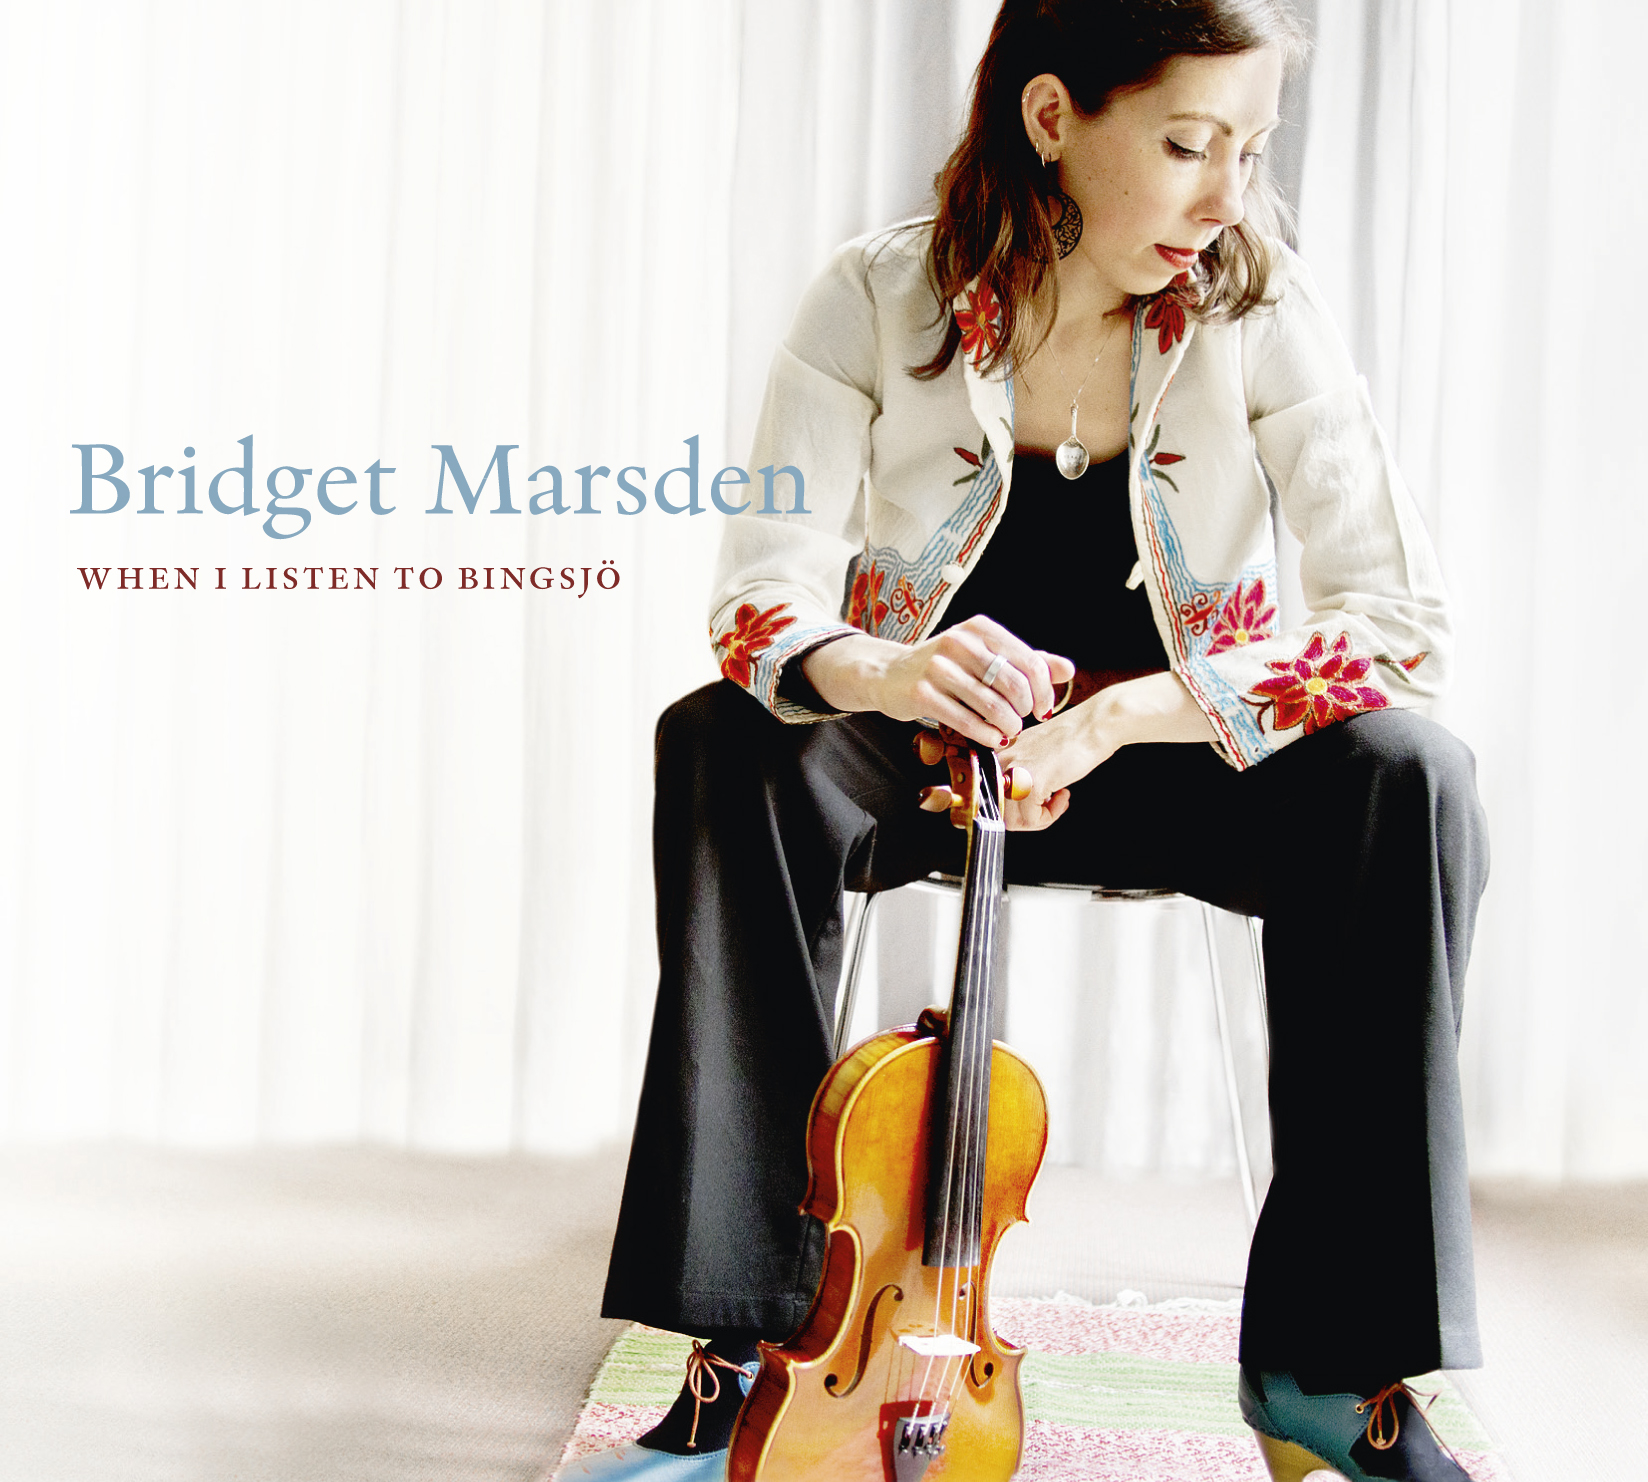 When I Listen To Bingsjö by Bridget Marsden_album cover